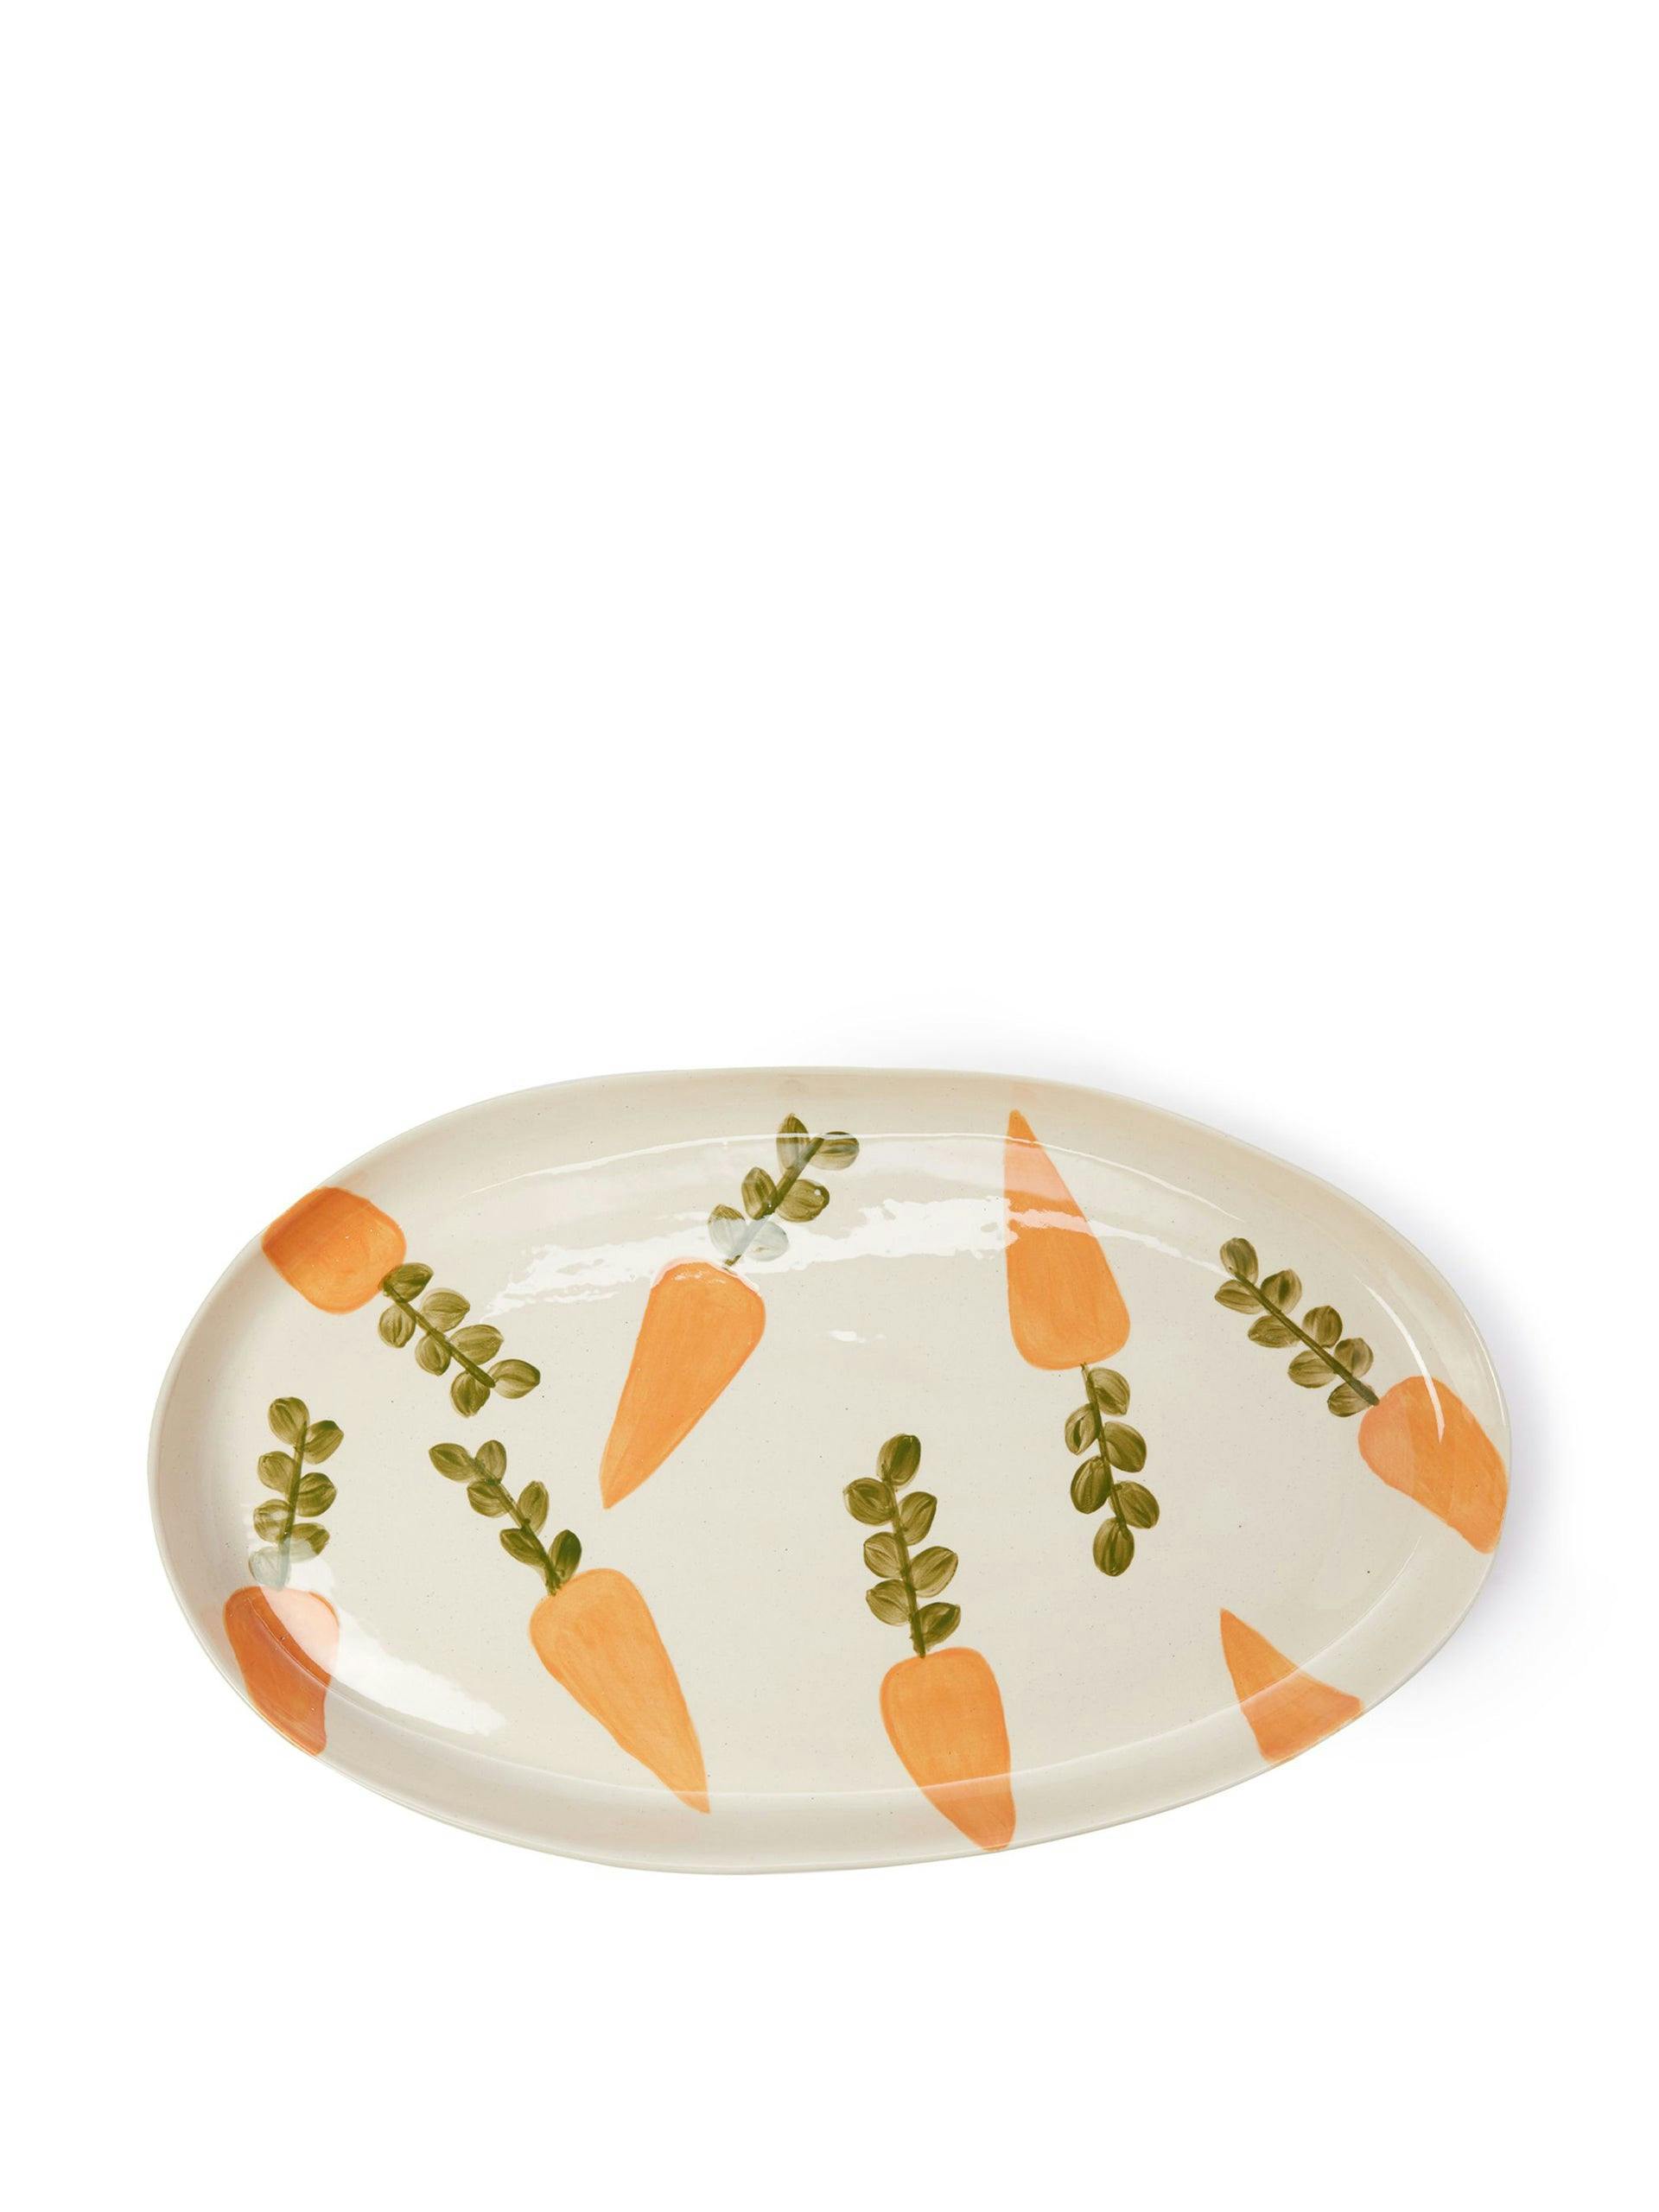 Oval carrots platter